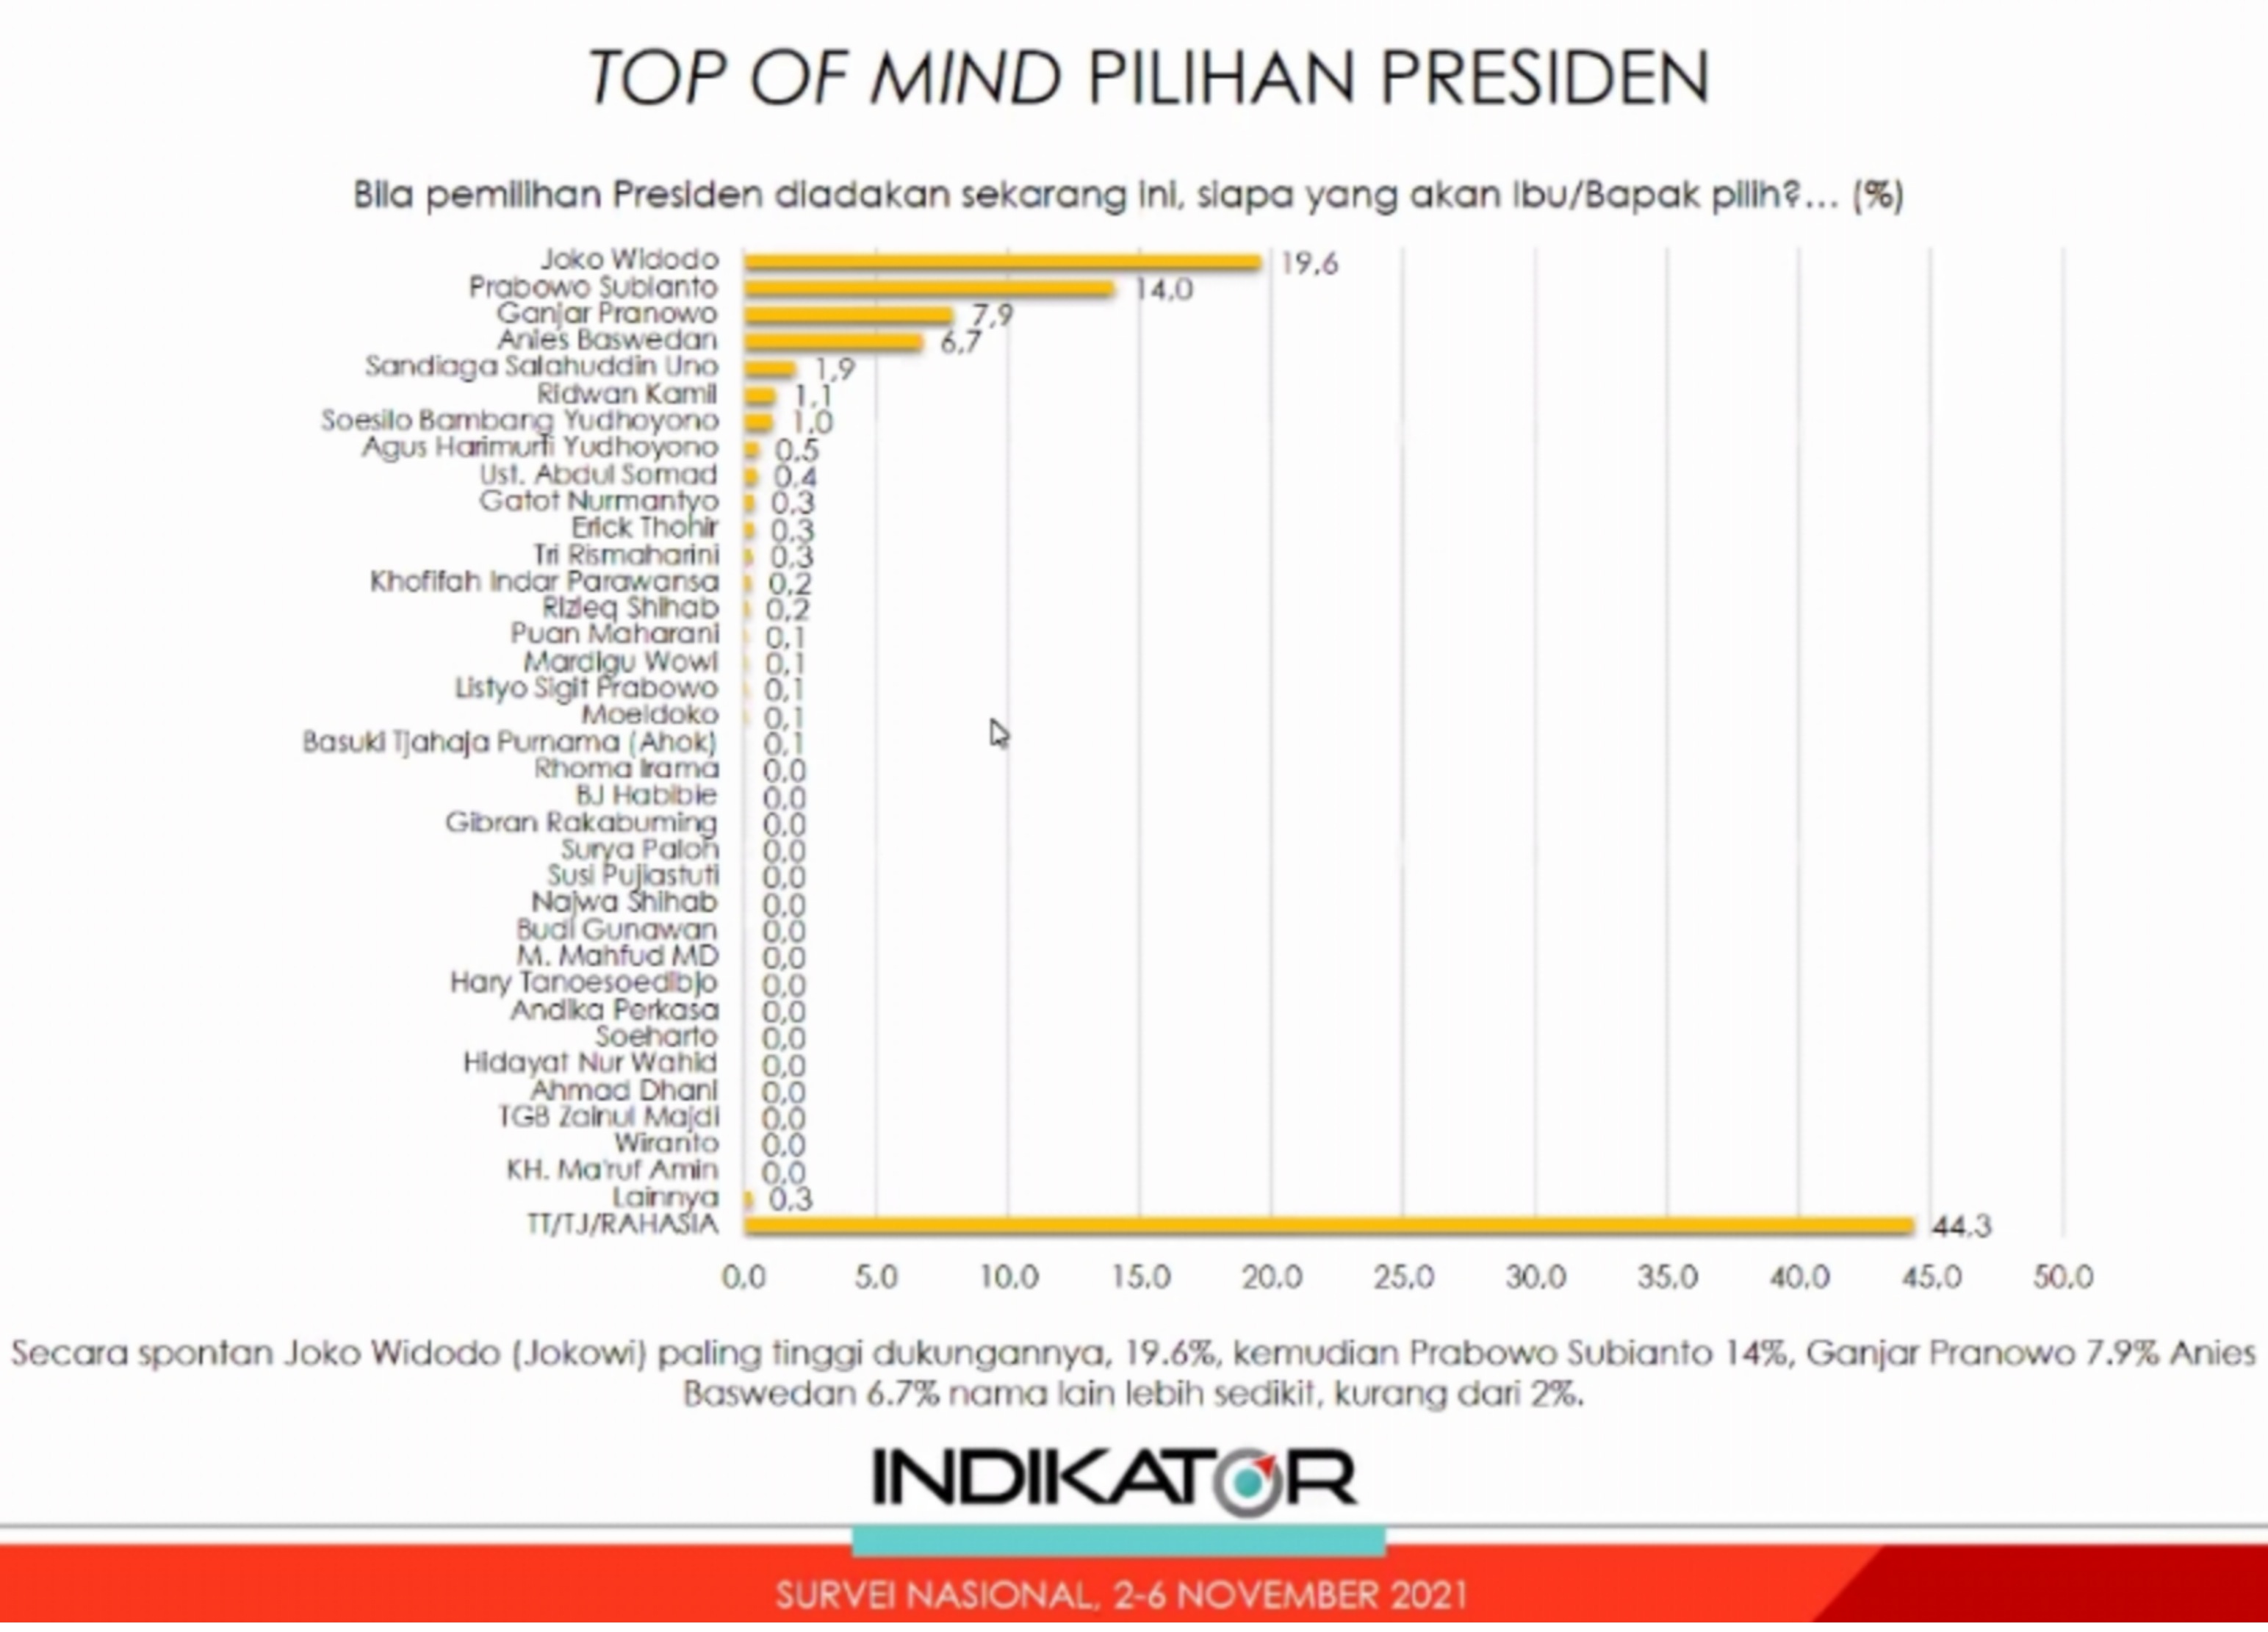 Top of Mind pilihan presiden pada November 2021, menurut survei Indikator